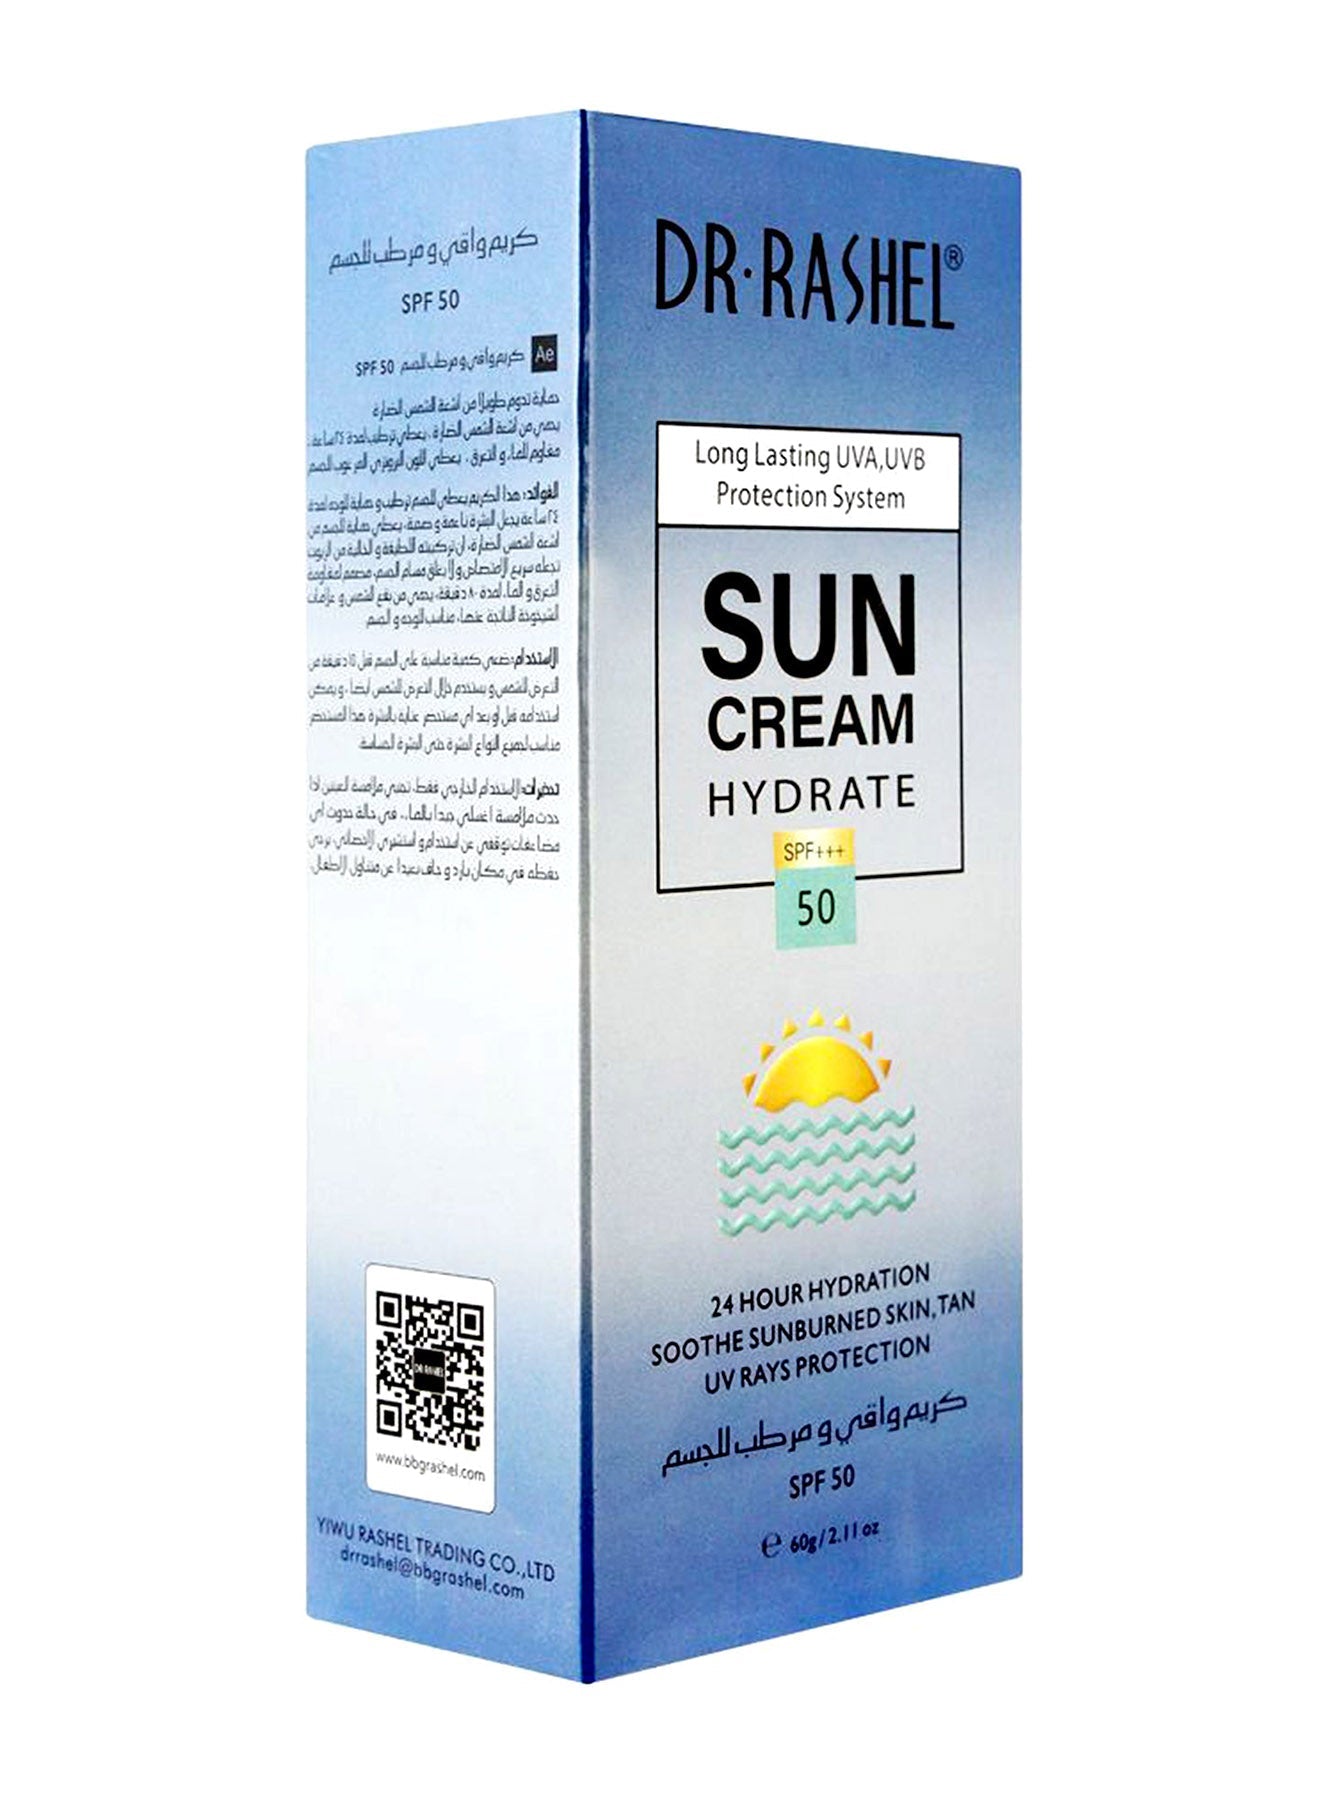 Dr Rashel Sunscreen Hydrate SPF 50 60g Value Pack of 2 